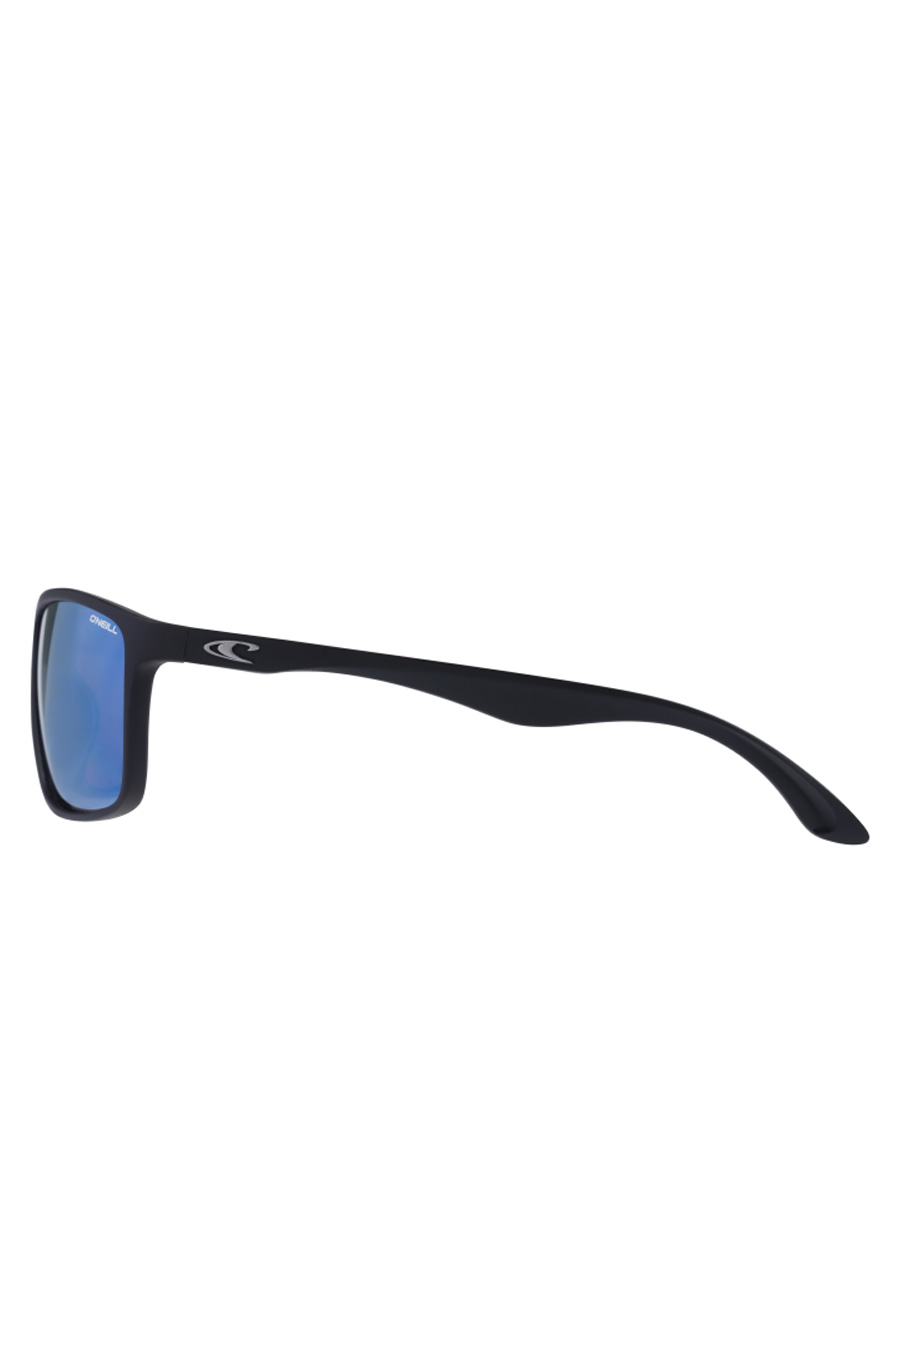 Sunglasses ONEILL ONS-9004-20-104P